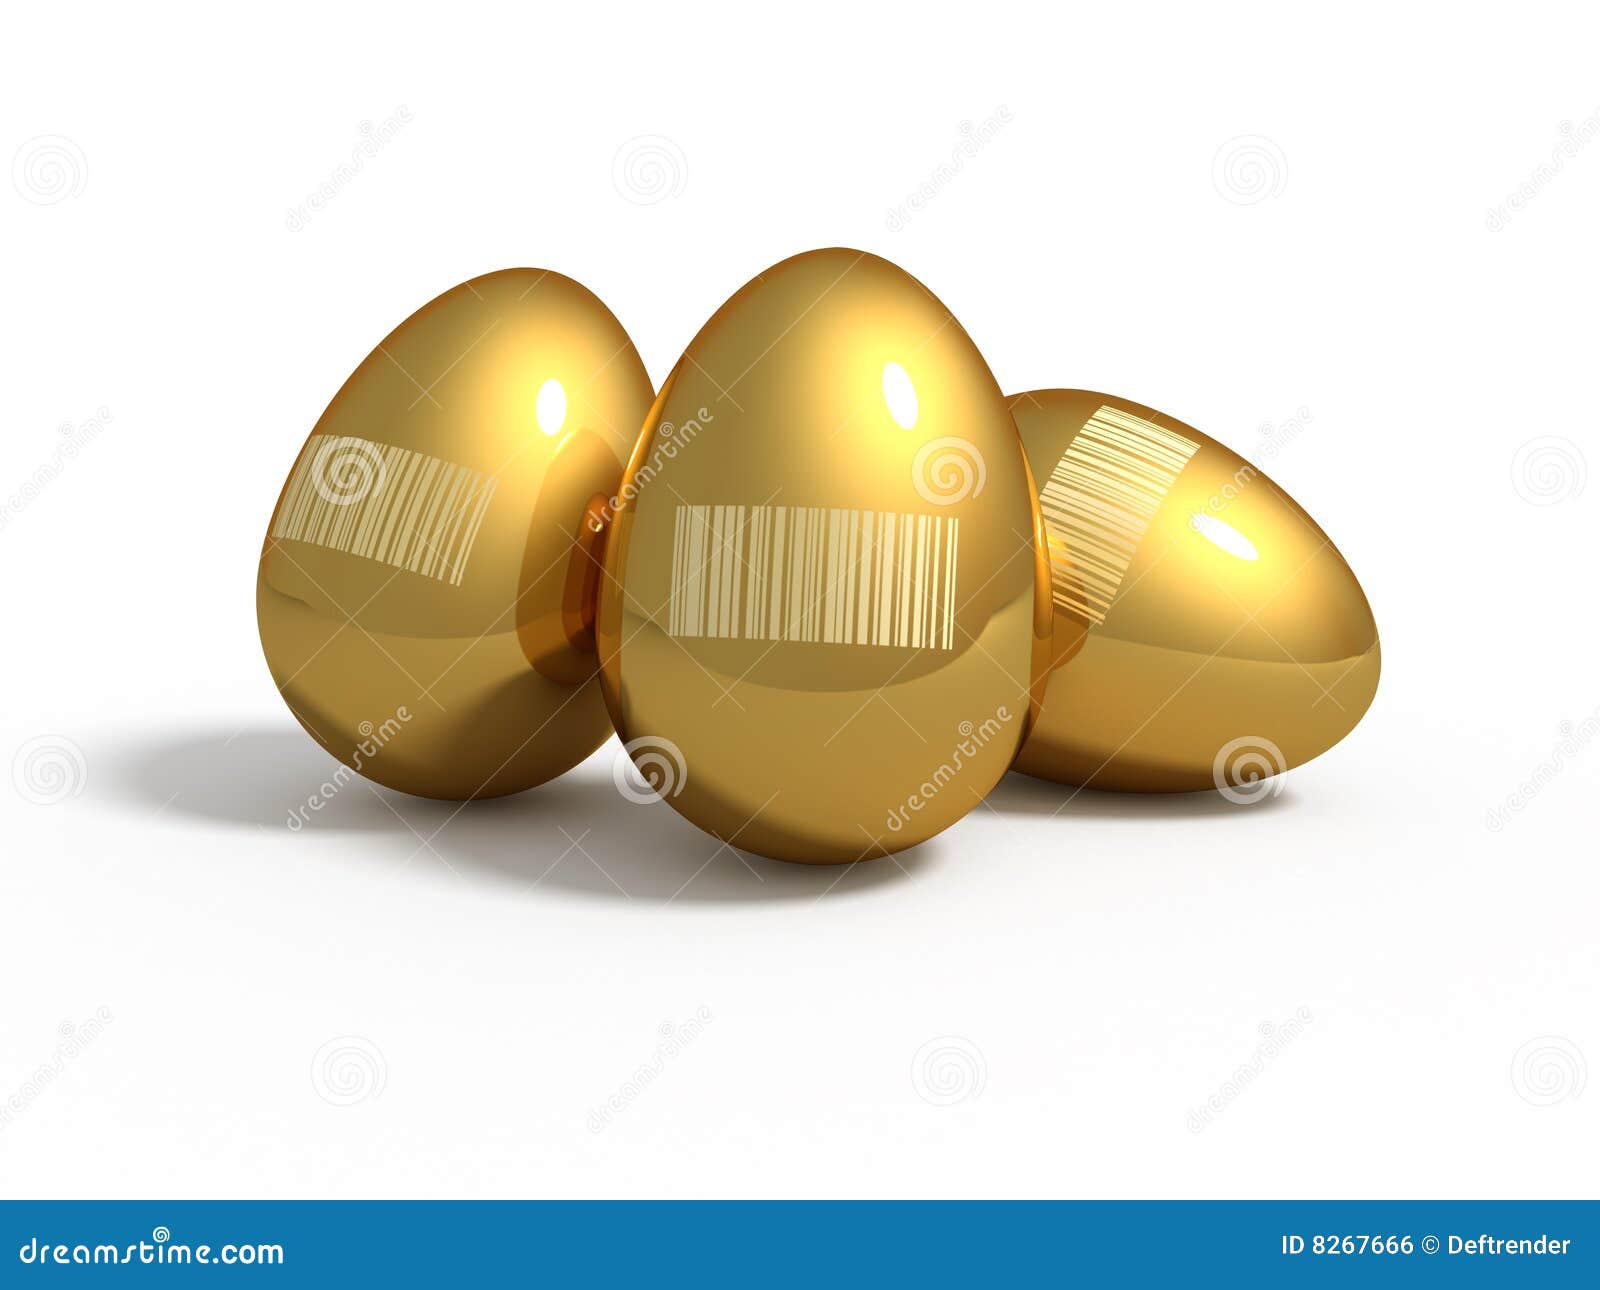 Golden eggs with barcodes stock illustration. Illustration of money ...